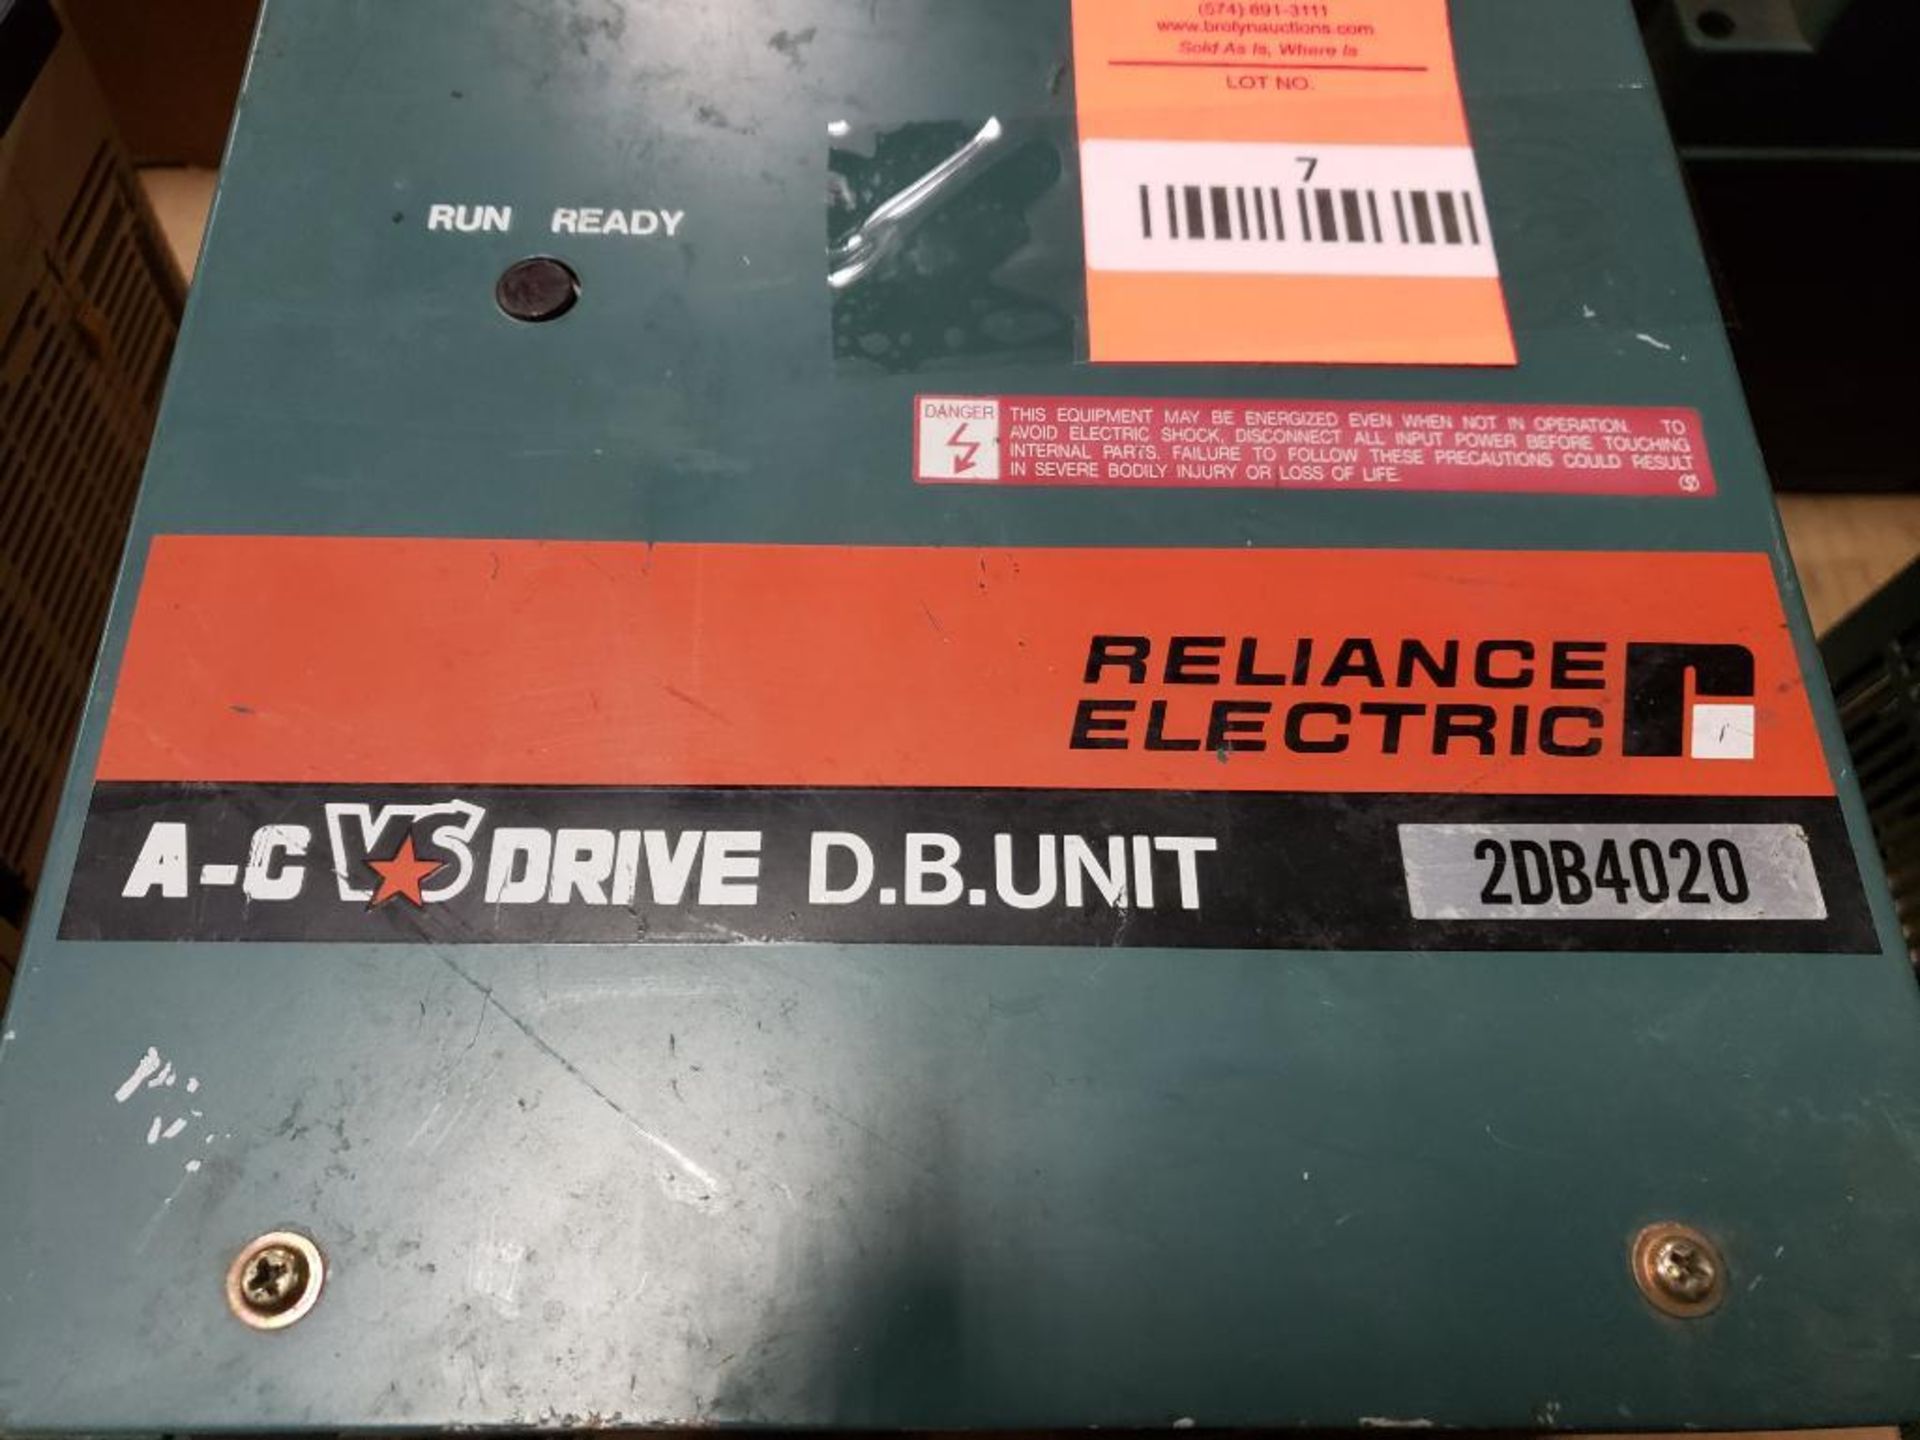 Reliance Electric A-C VS Drive D.B. Unit. 2DB4020. - Image 2 of 4